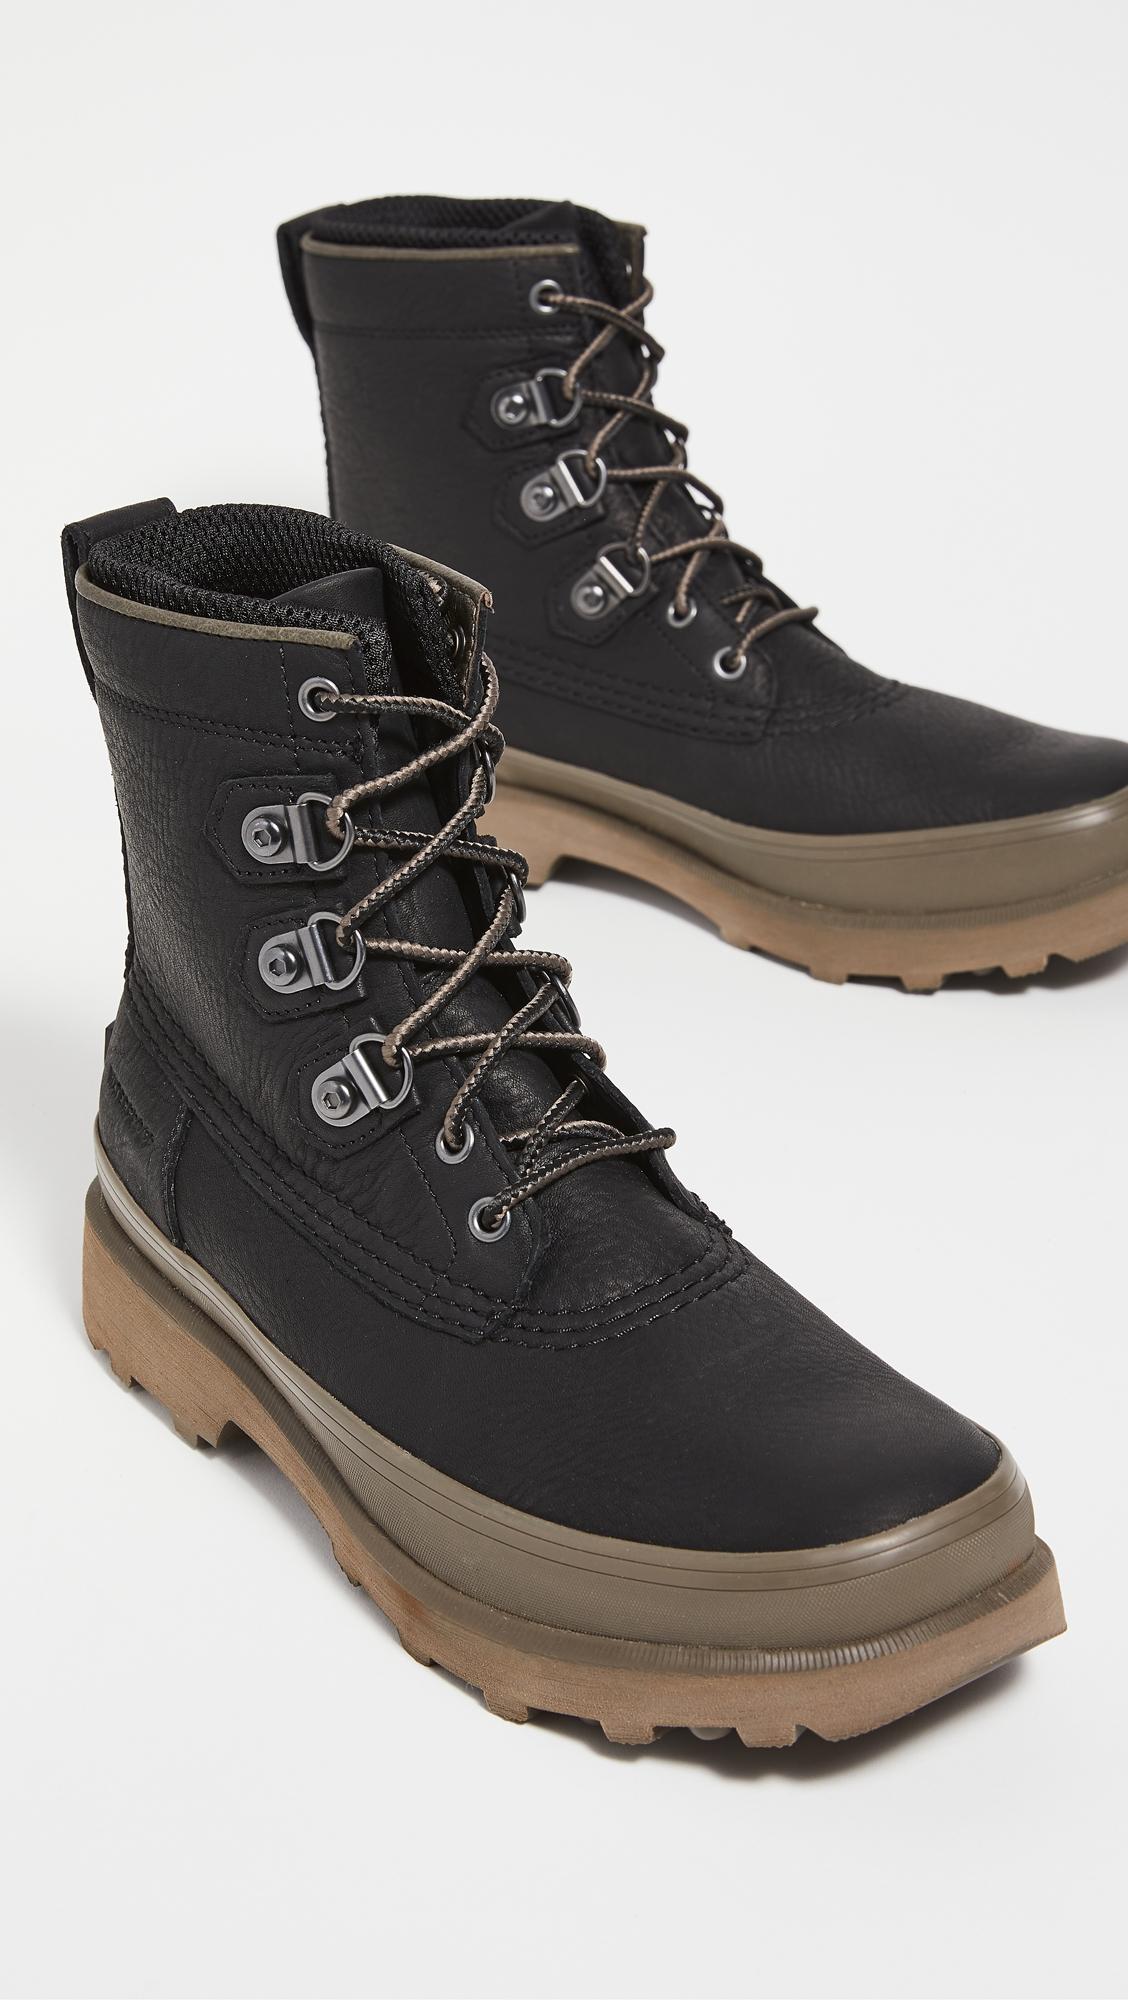 Sorel Leather Caribou Street Boots in Black for Men - Lyst